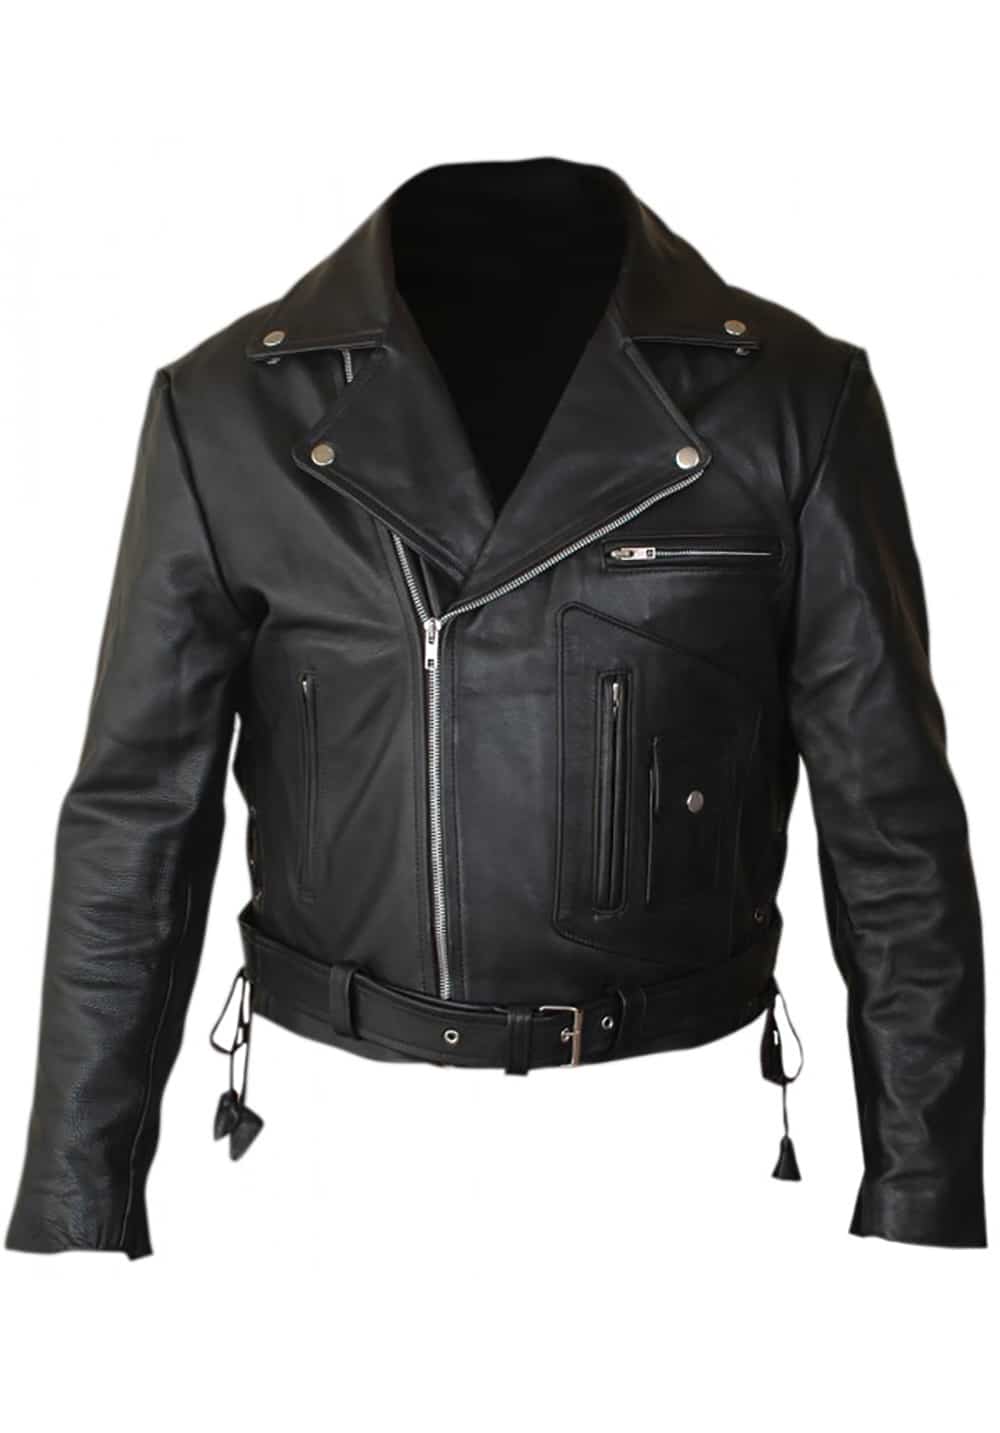 Terminator 2 jacket